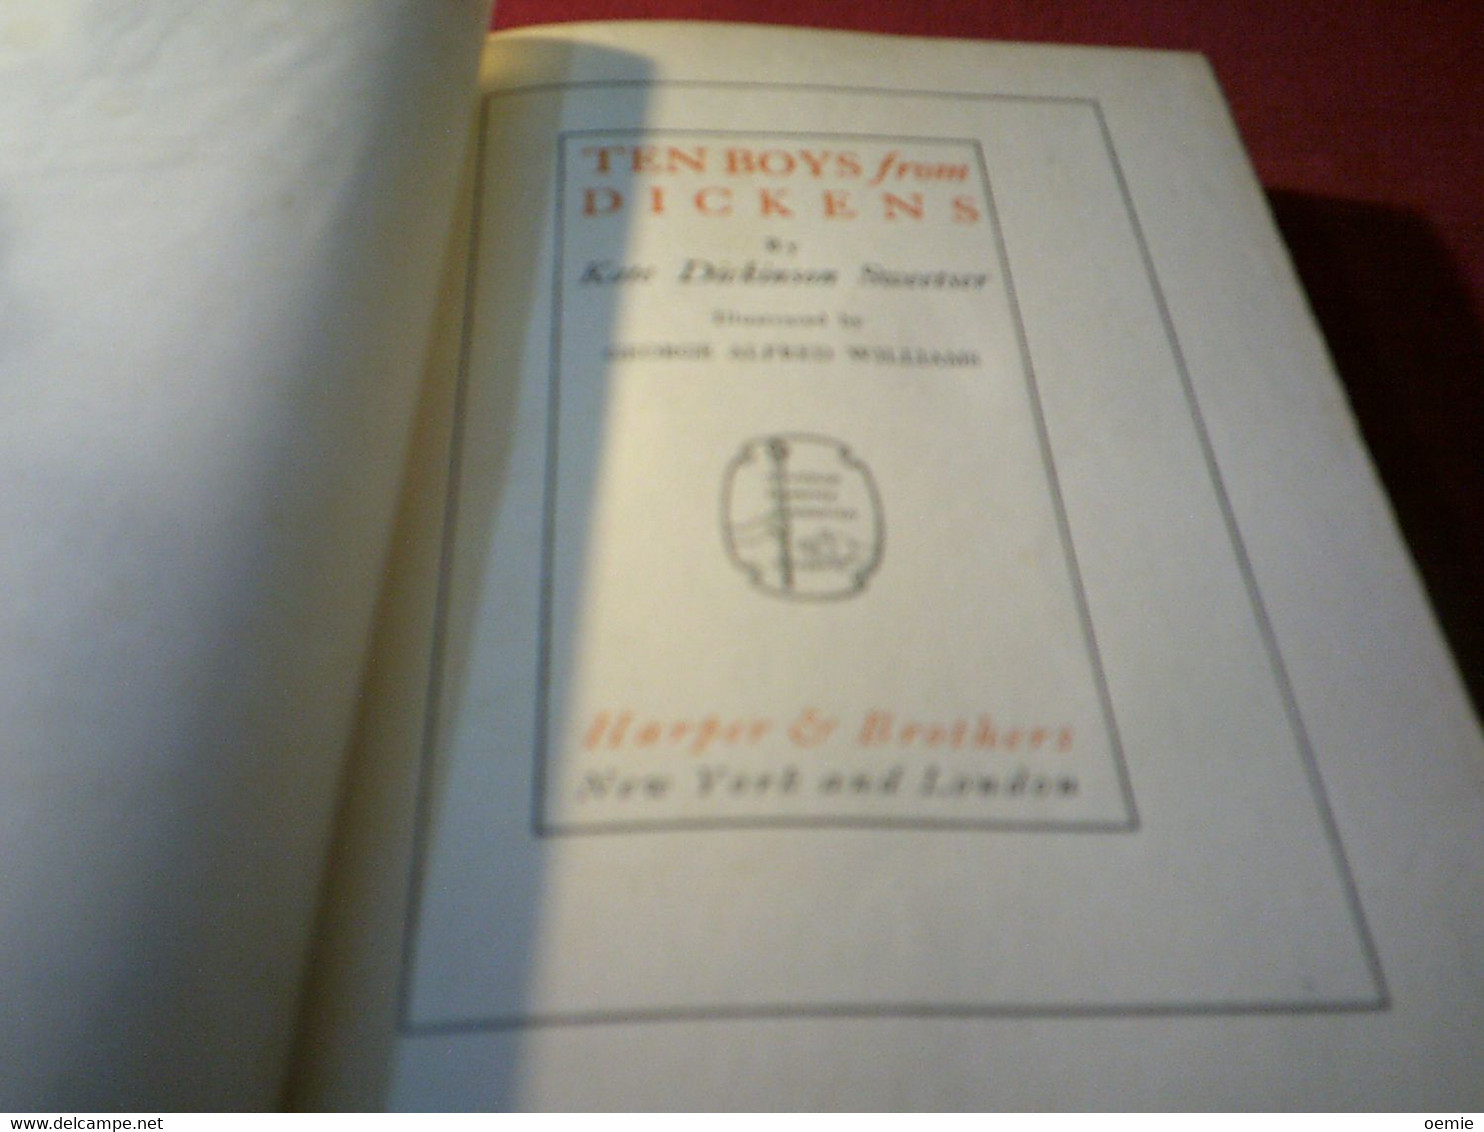 THE BOYS  FROM DICKENS    /   EDITION HARPER & BROTHERS  NEW YORK  AND LONDON  1901 JANVIER - Geïllustreerde Boeken